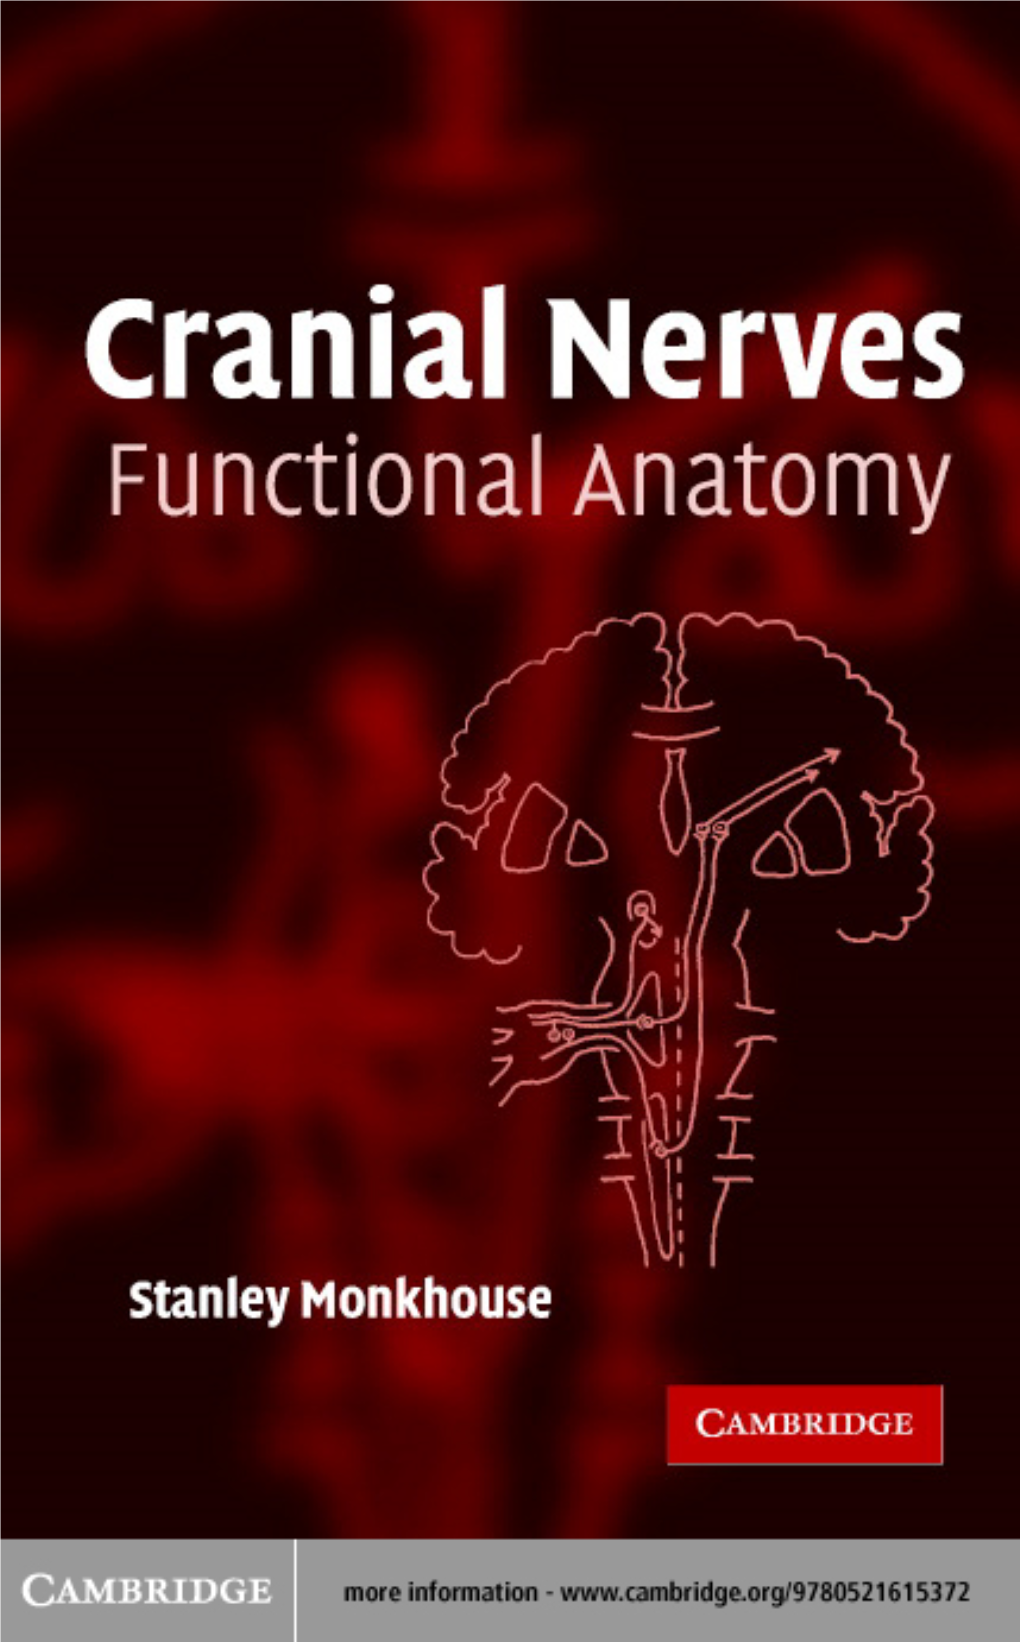 CRANIAL NERVES: Functional Anatomy